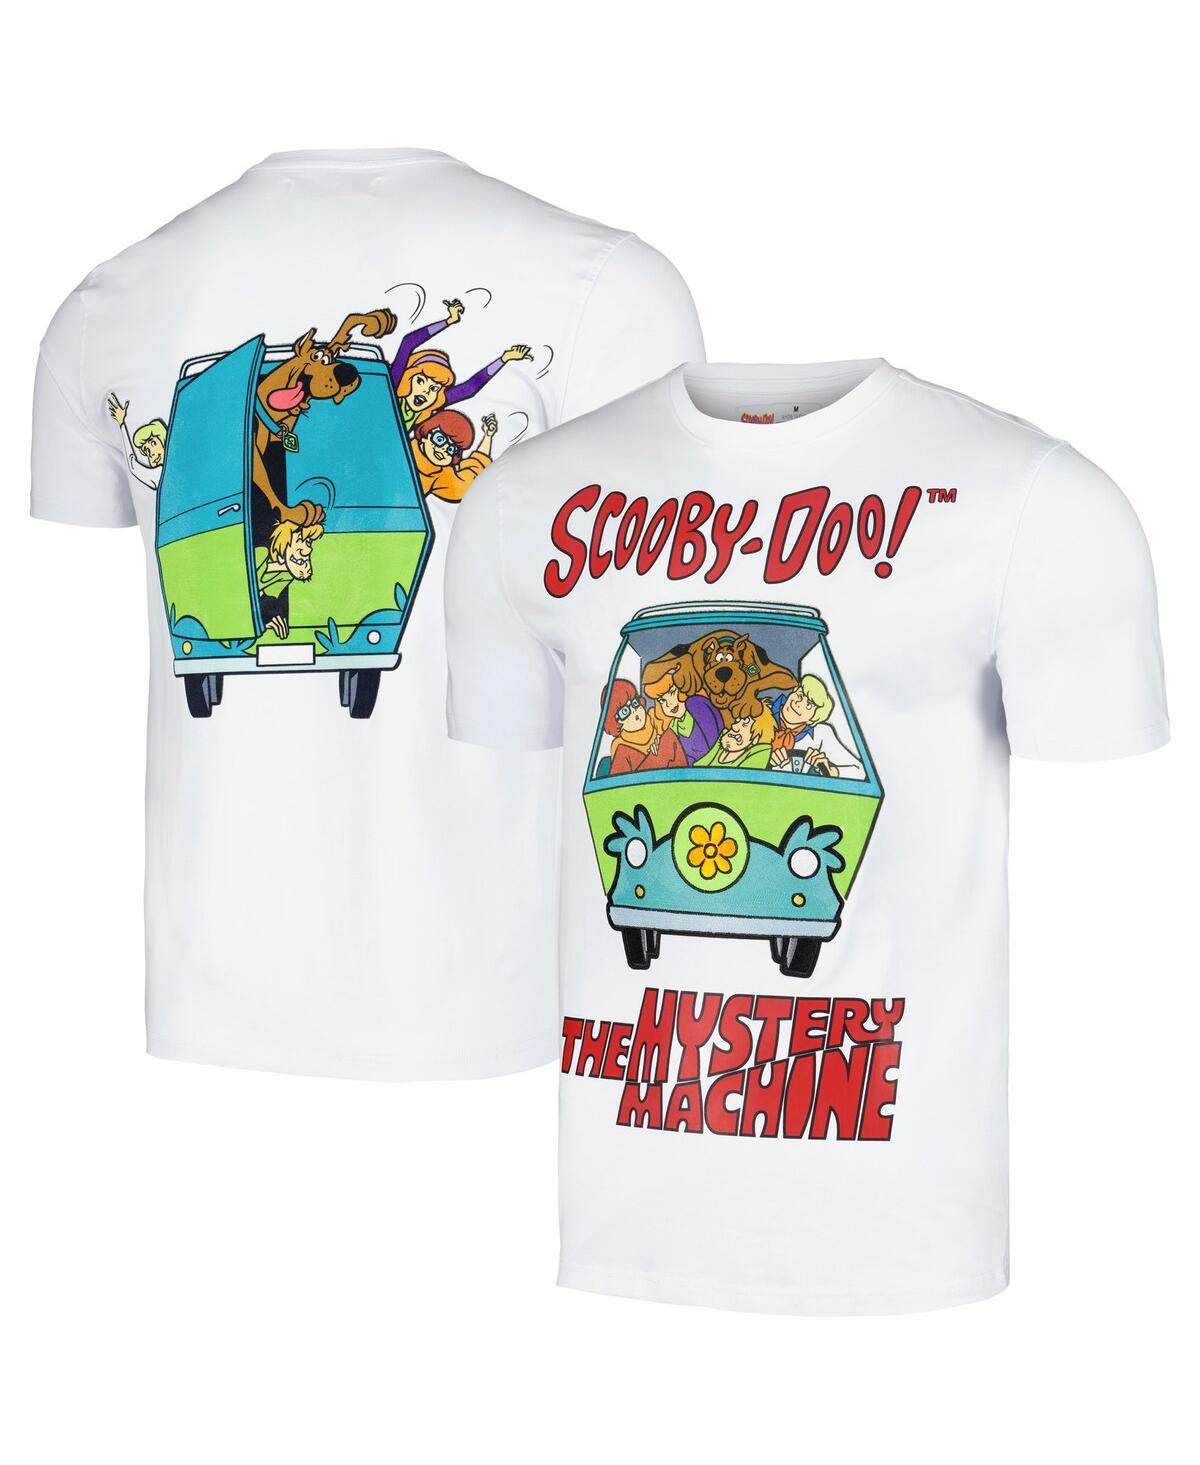 Men's and Women's Freeze Max White Scooby-Doo Mystery Machine T-shirt - White